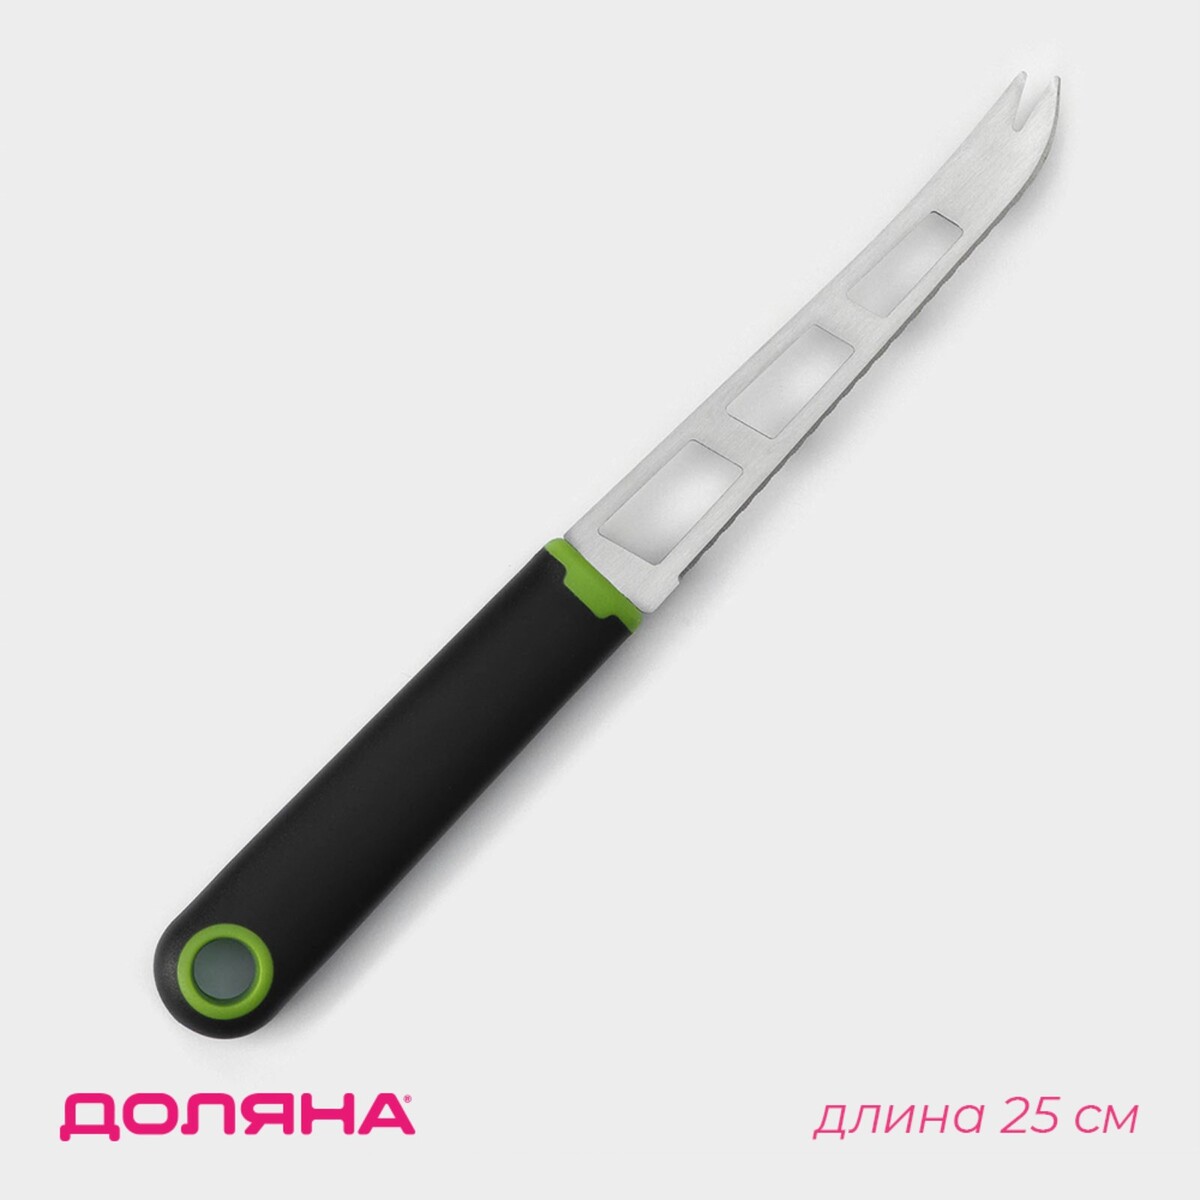 Нож для сыра доляна lime, 25×2,3 см, цвет черно-зеленый нож для сыра доляна lime 25×2 3 см черно зеленый